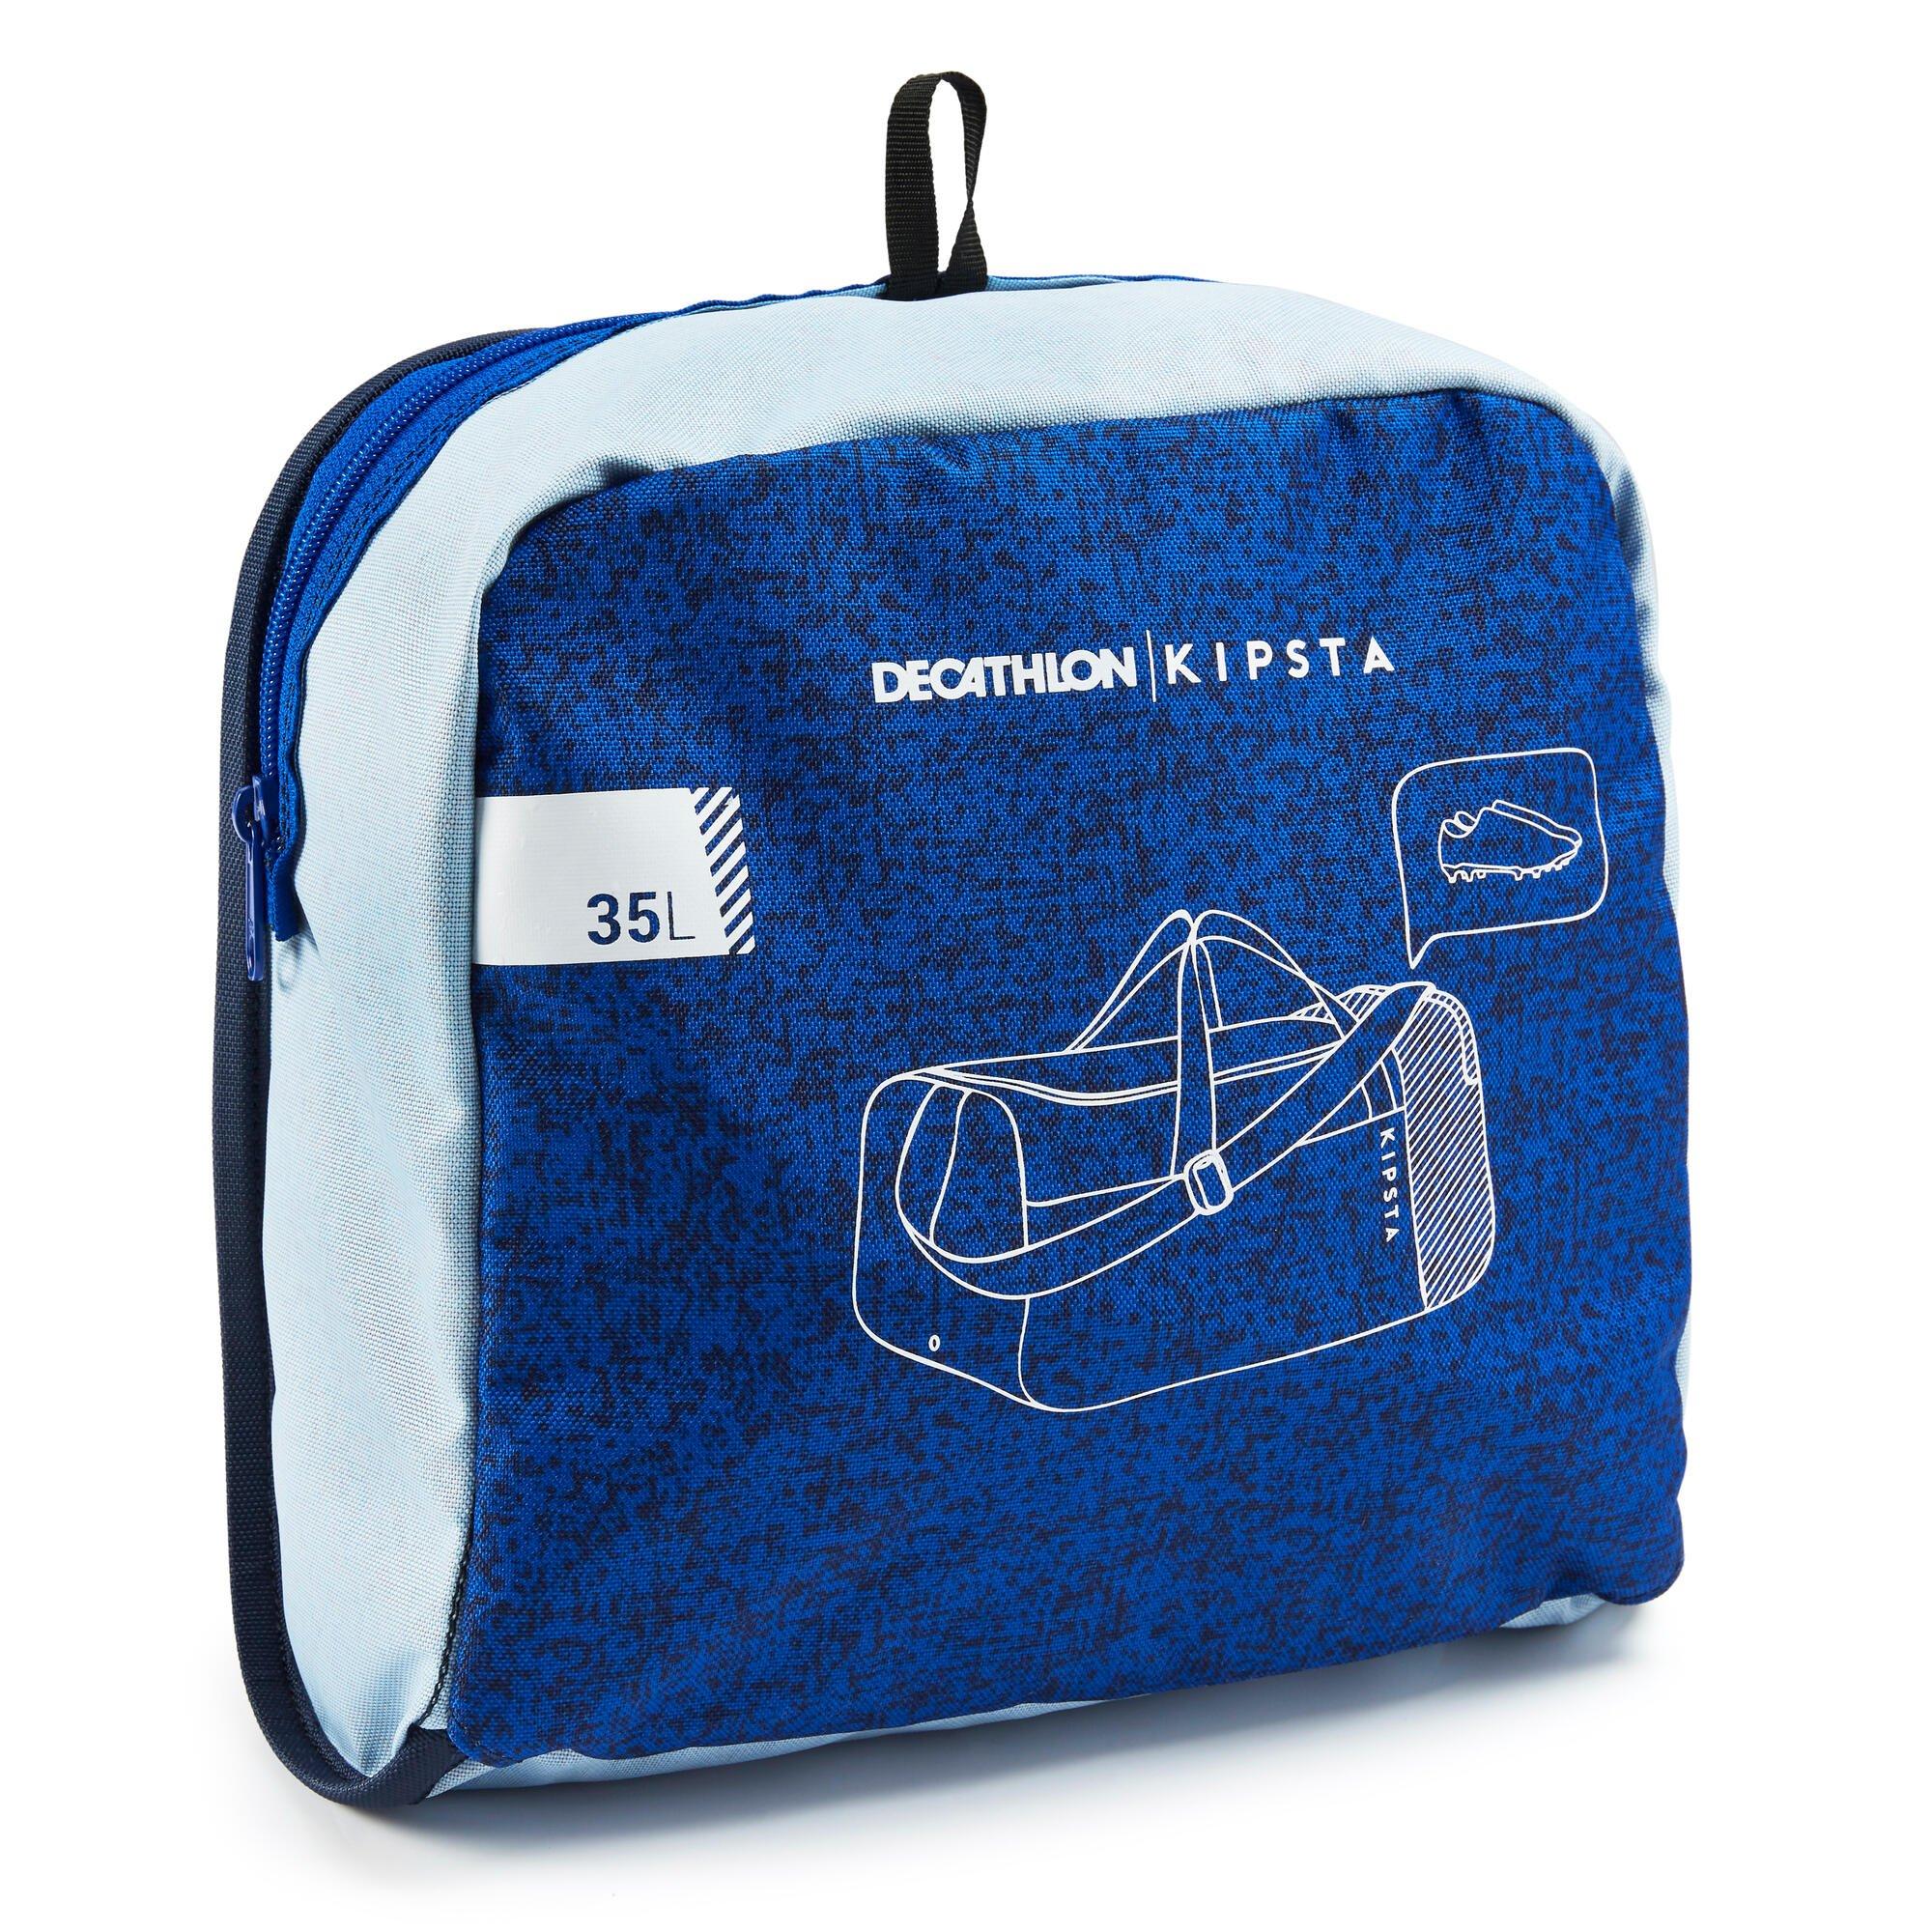 Decathlon travel trolley bag - Kipsta - YouTube